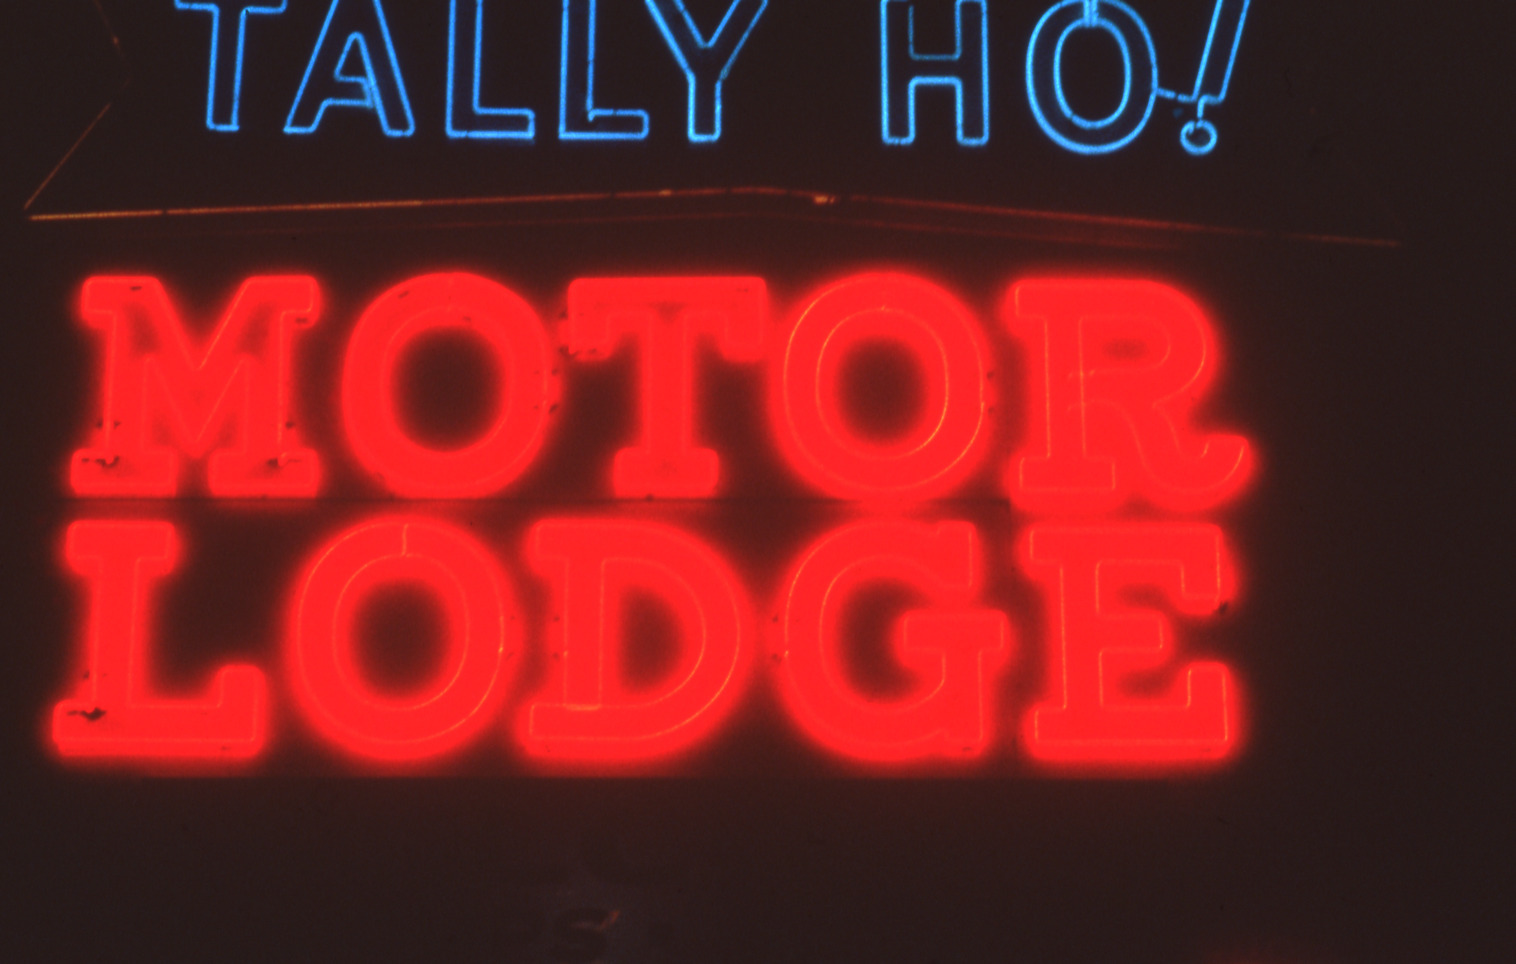 Tally Ho! Motor Lodge sign, Reno, Nevada: photographic print